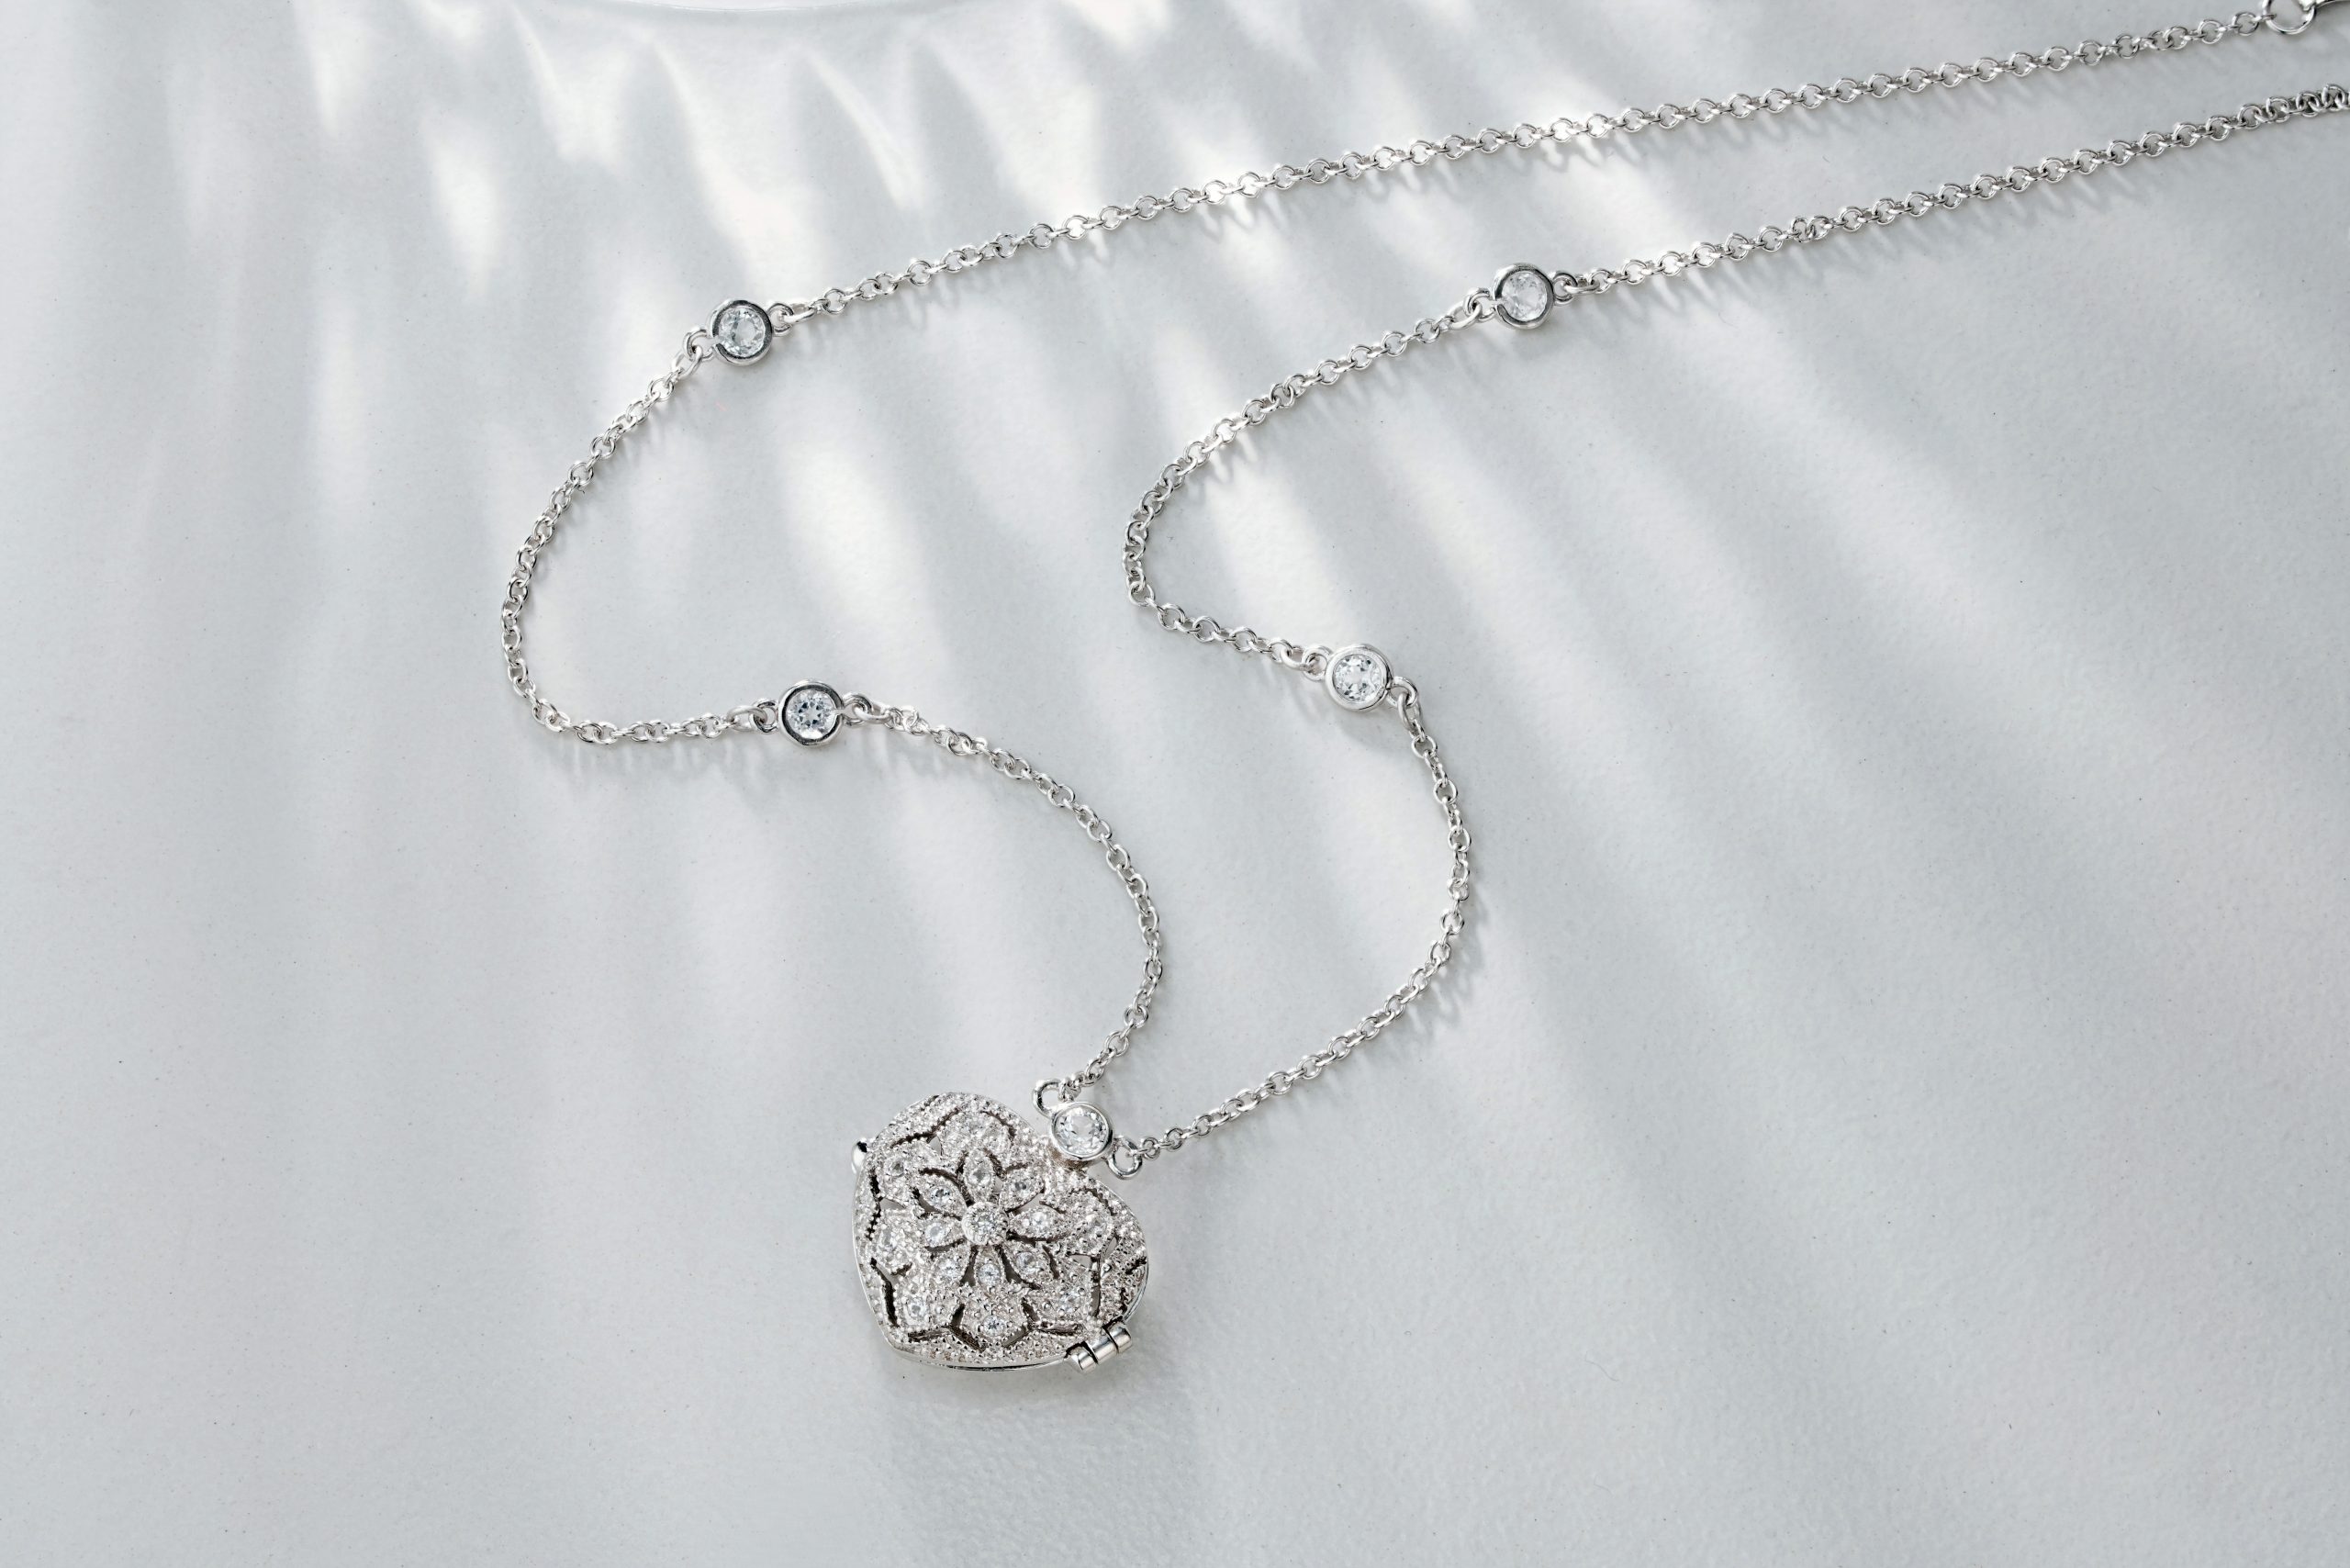 Silver heart locket necklace